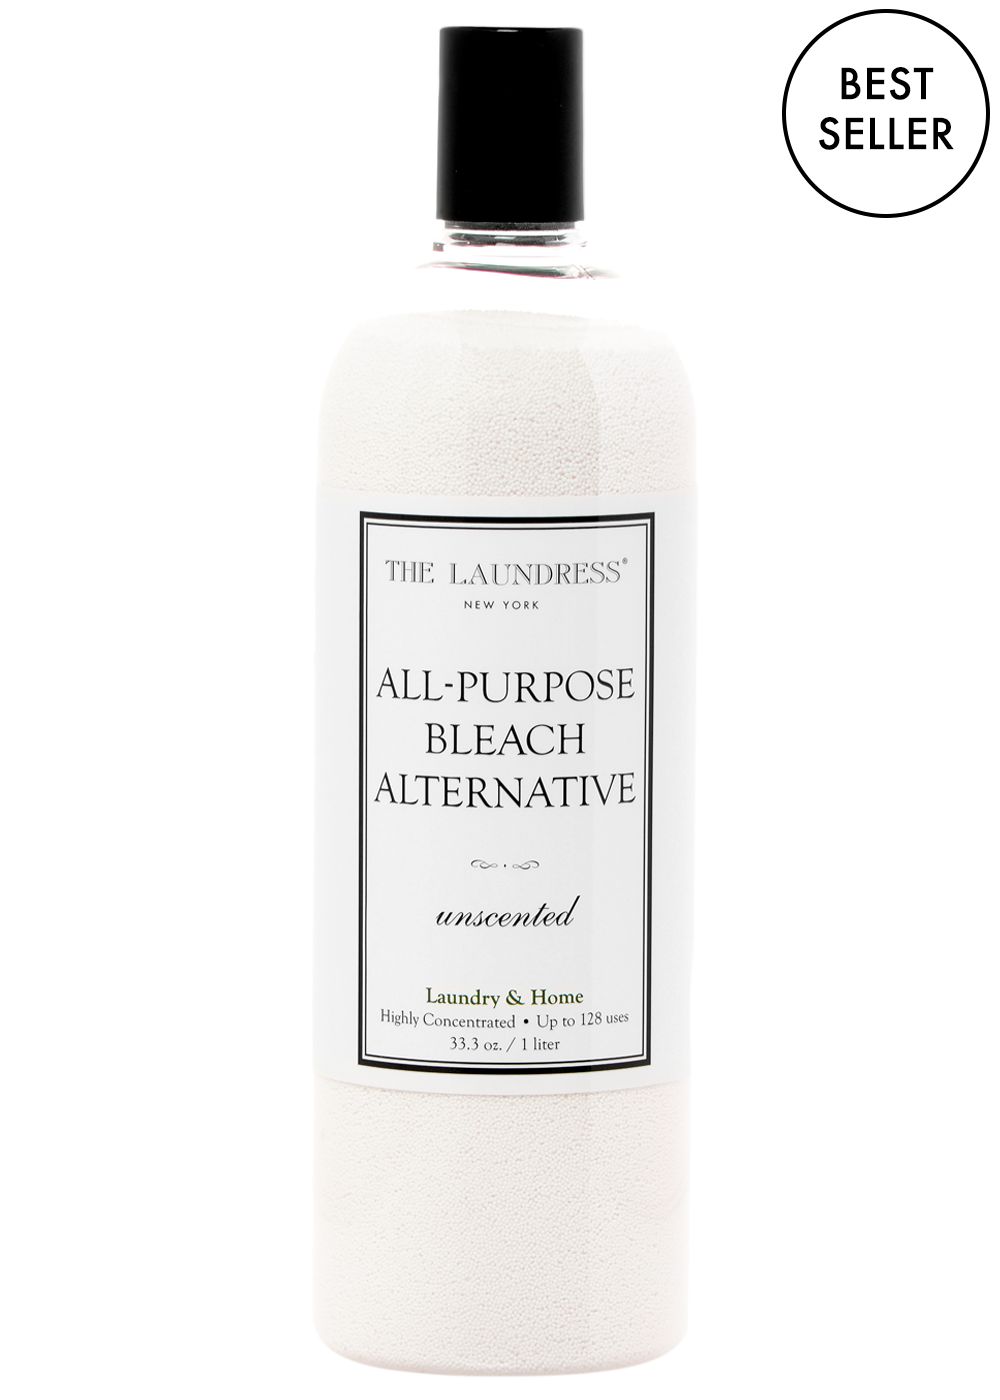 All-Purpose Bleach Alternative | The Laundress